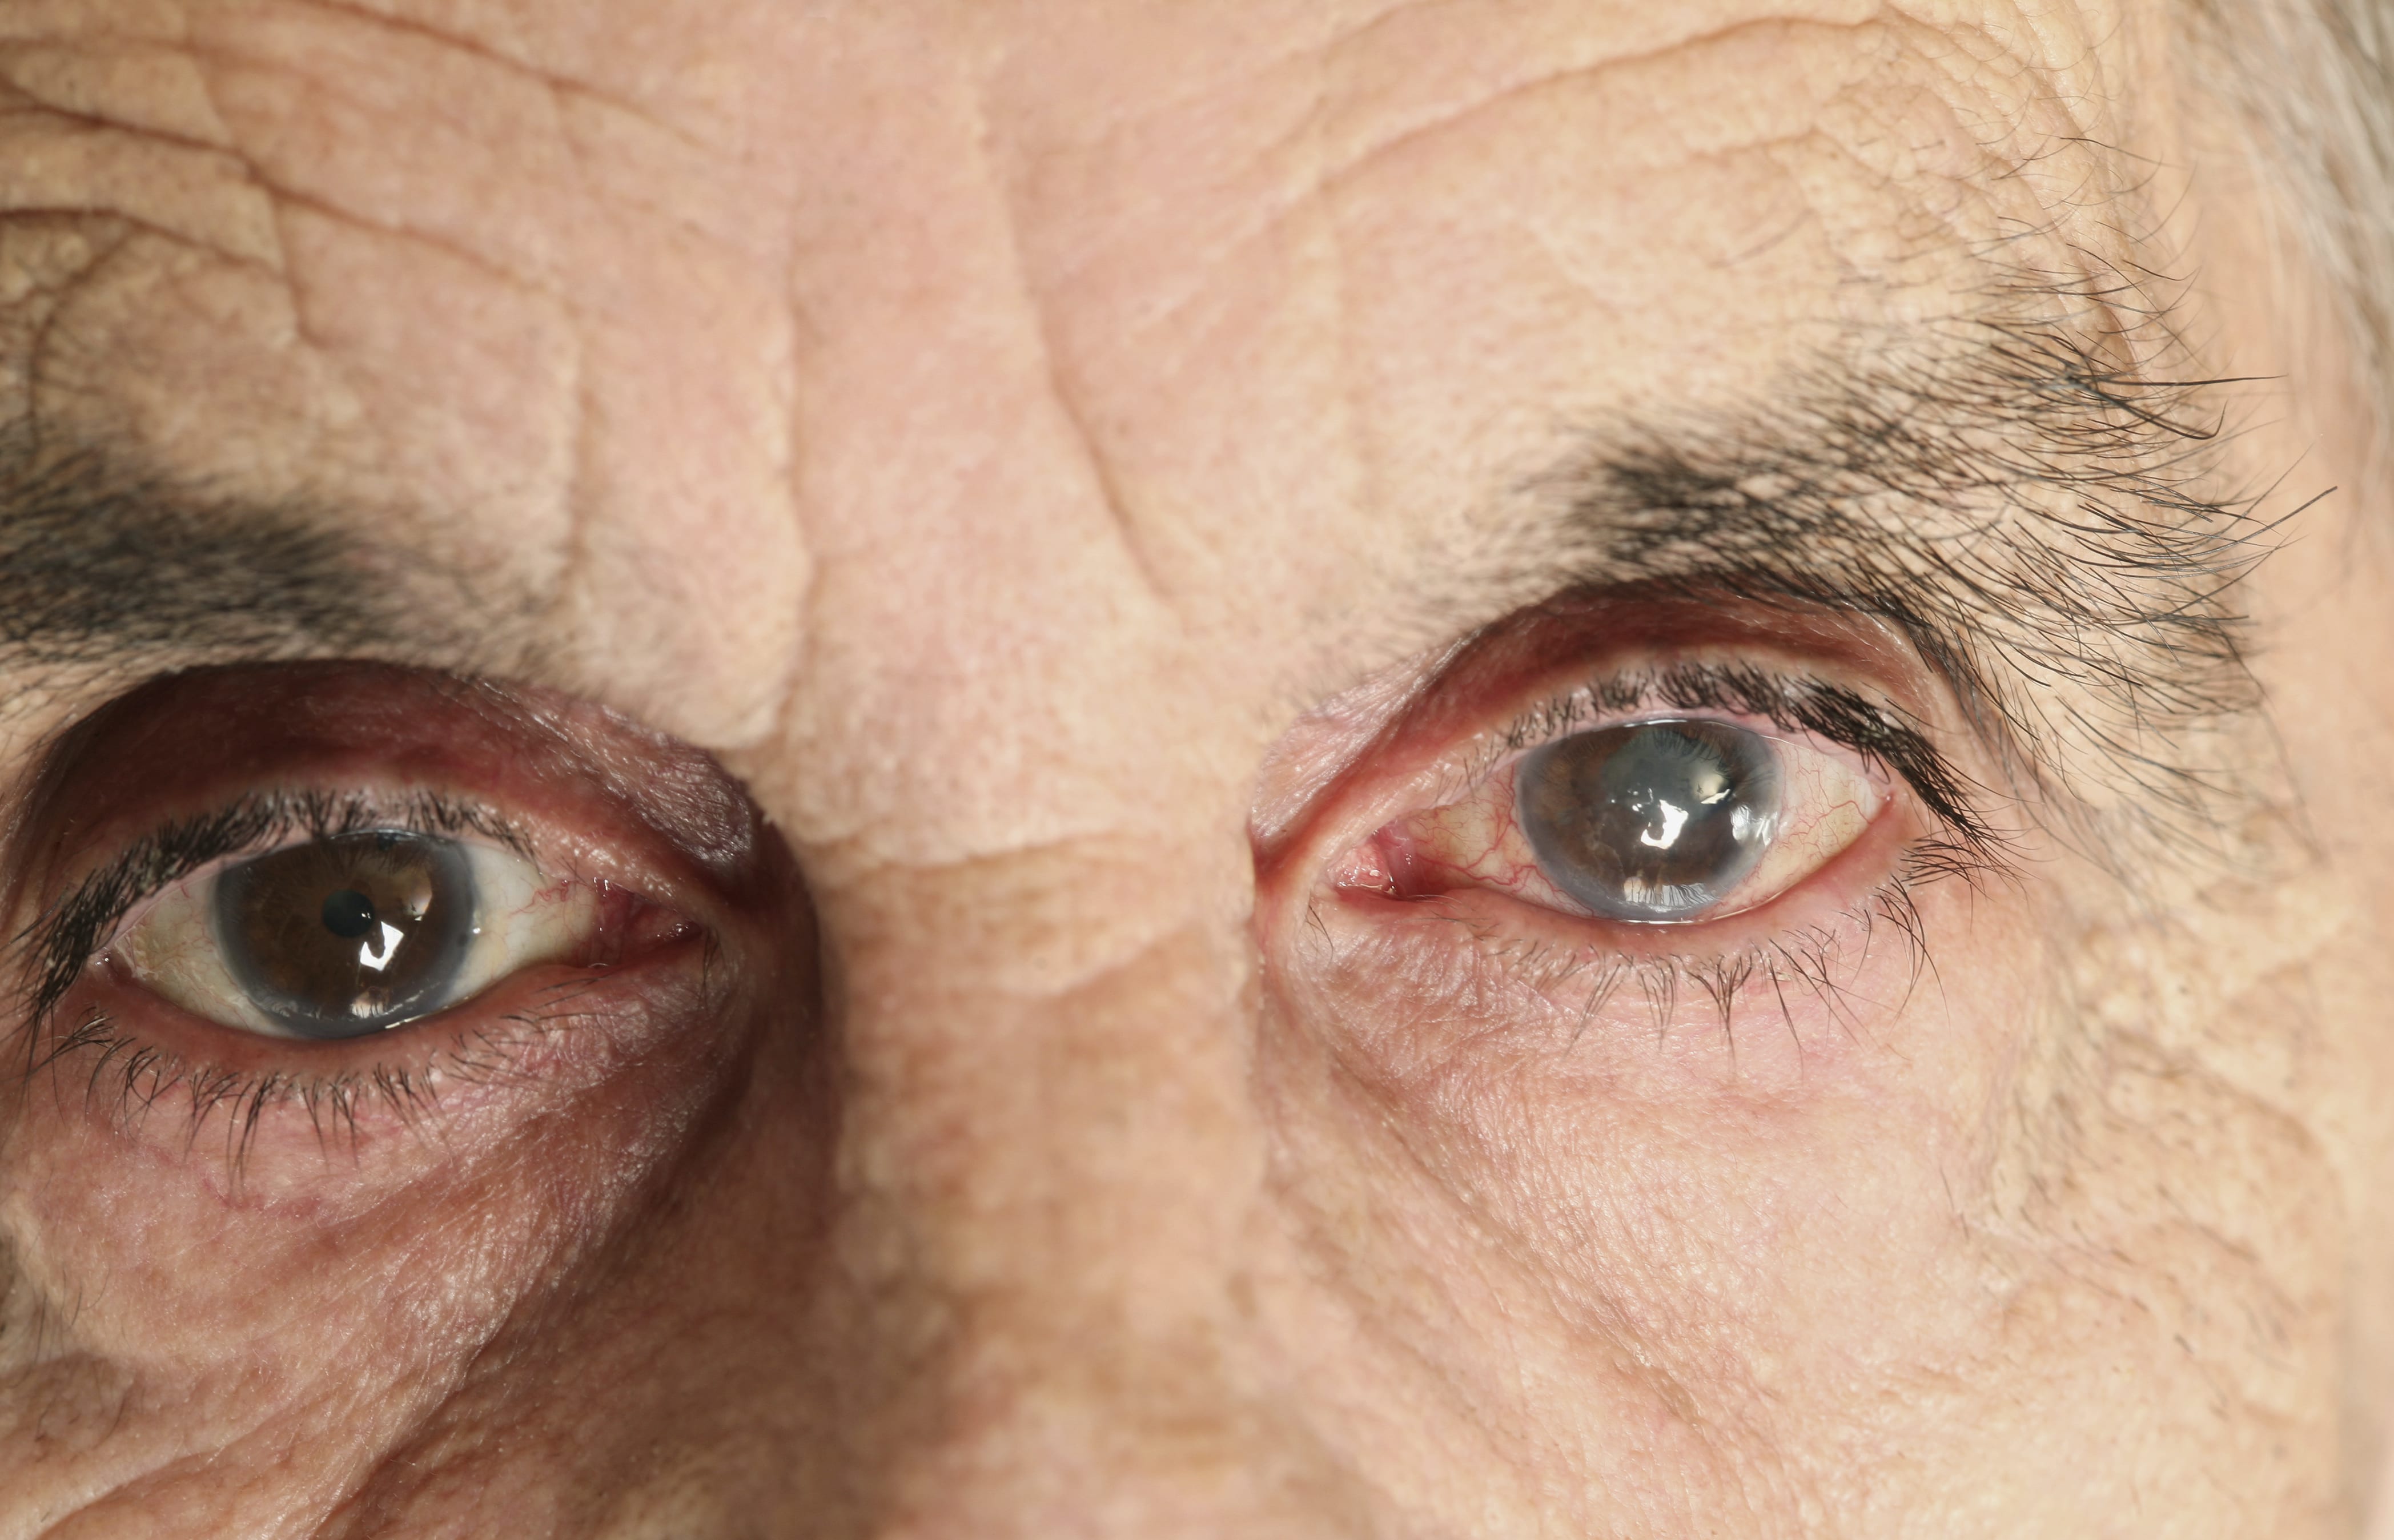 Senior's eyes with cataract and glaucoma.